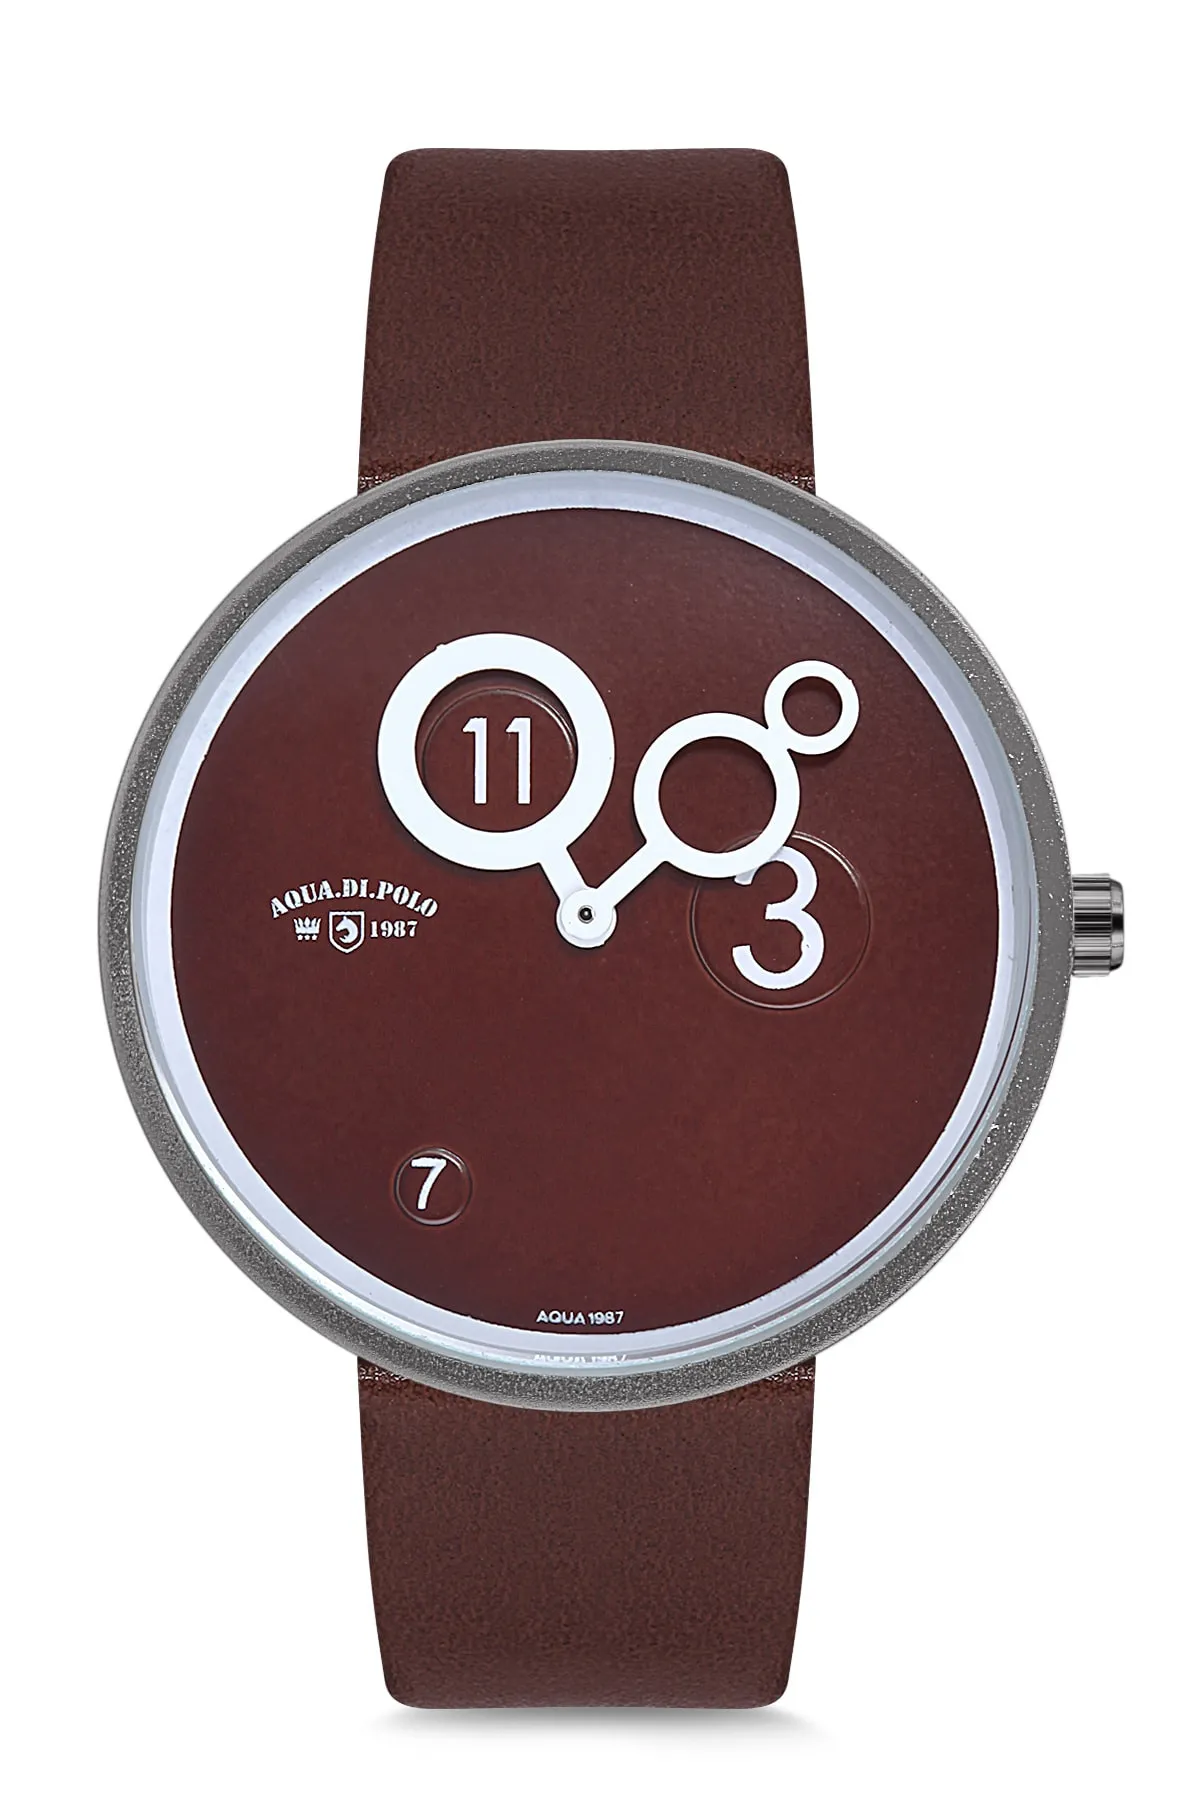 Кожаные наручные часы унисекс Di Polo apwa028504#2